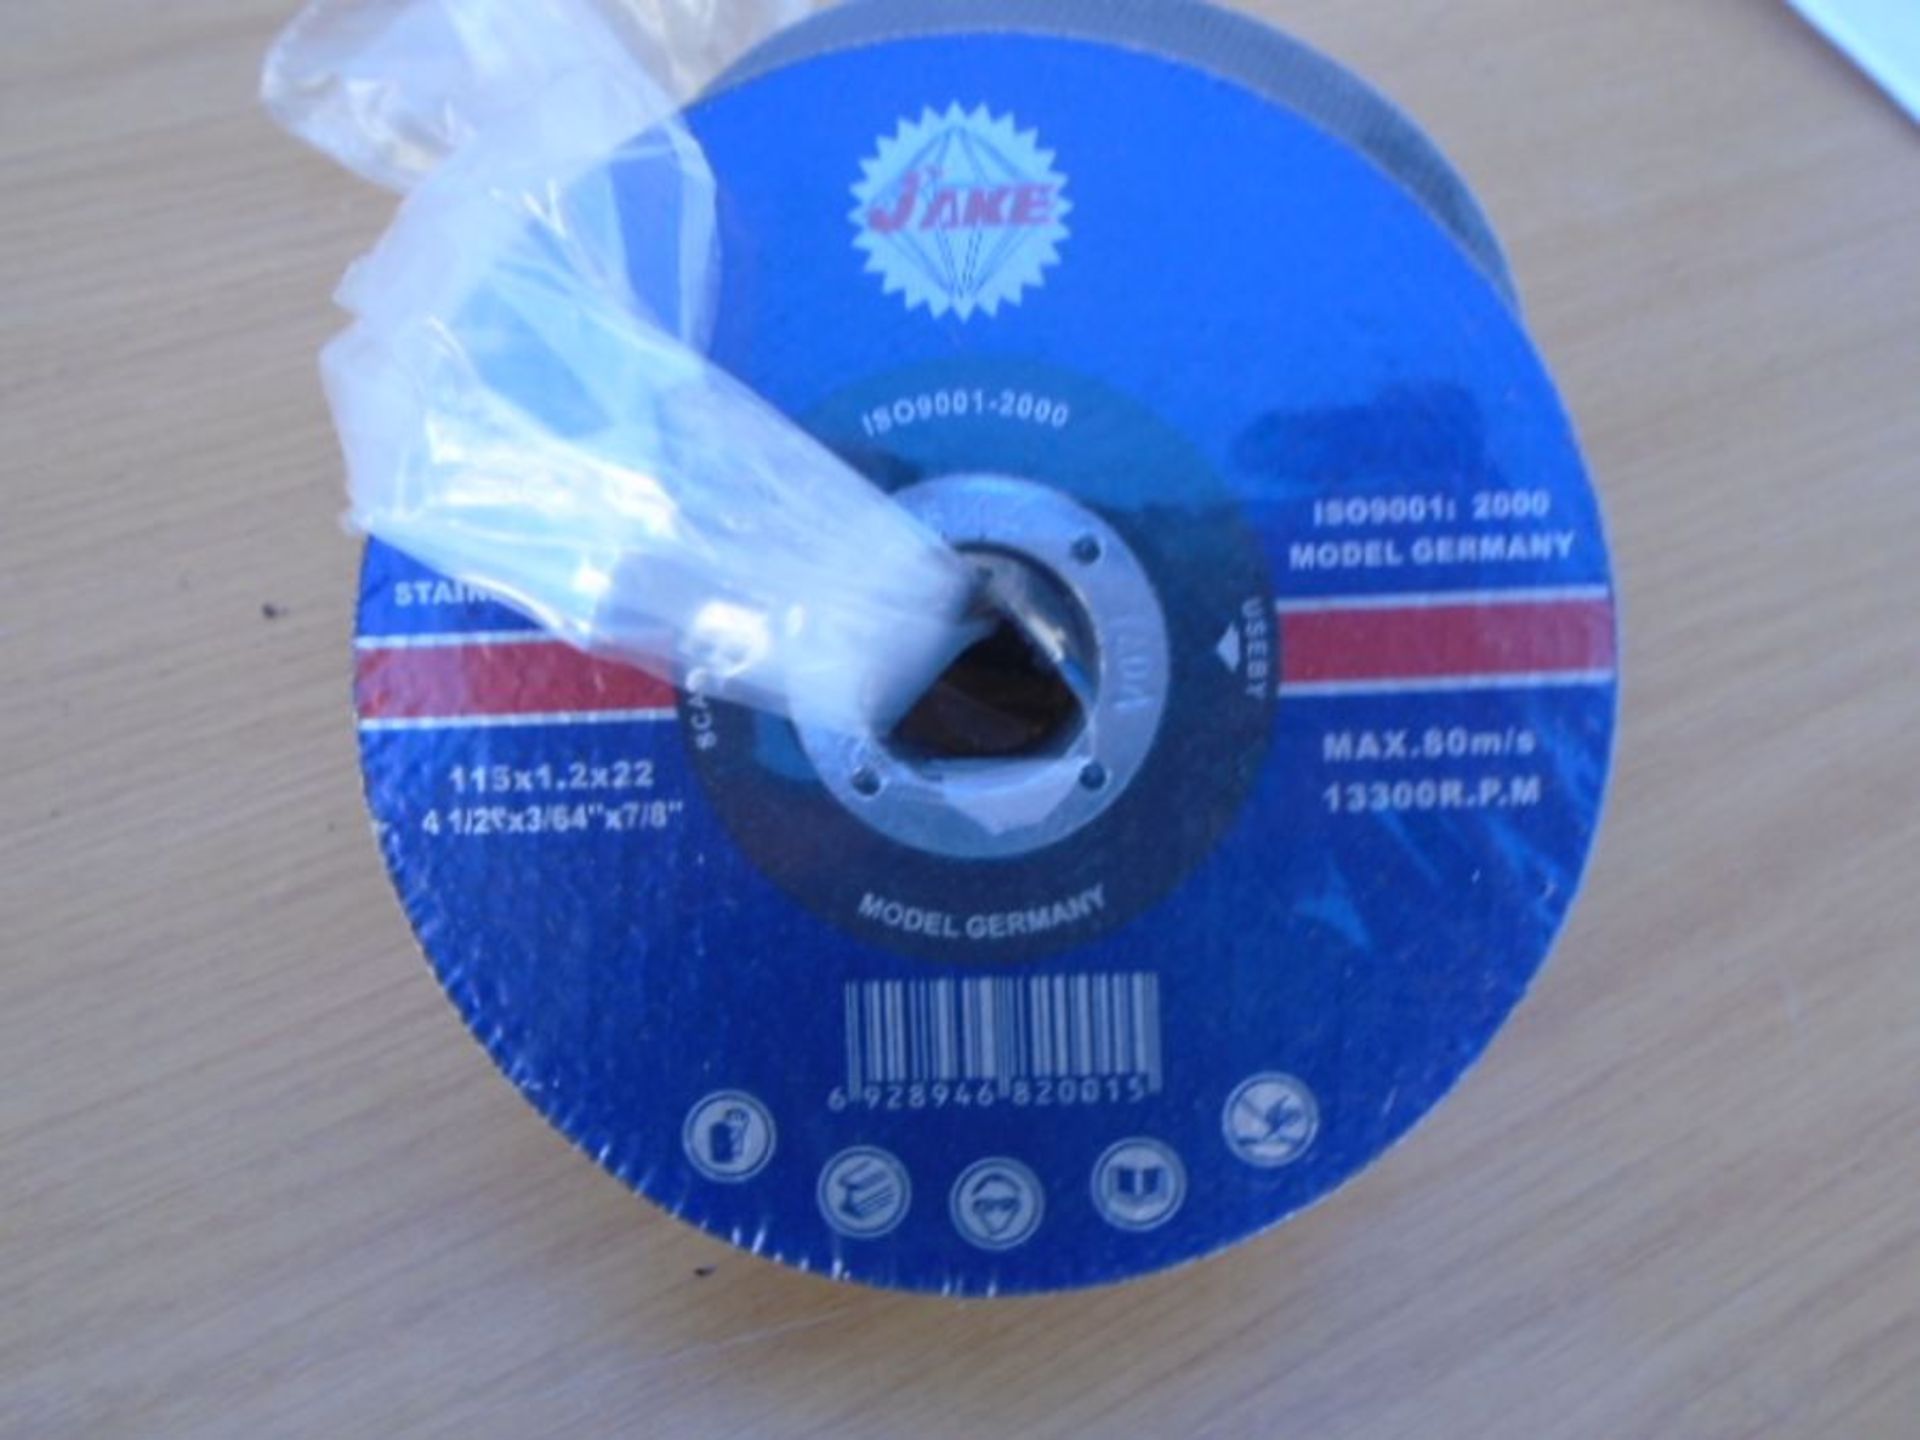 50x4-1/2"stainless zip discs - Image 2 of 2